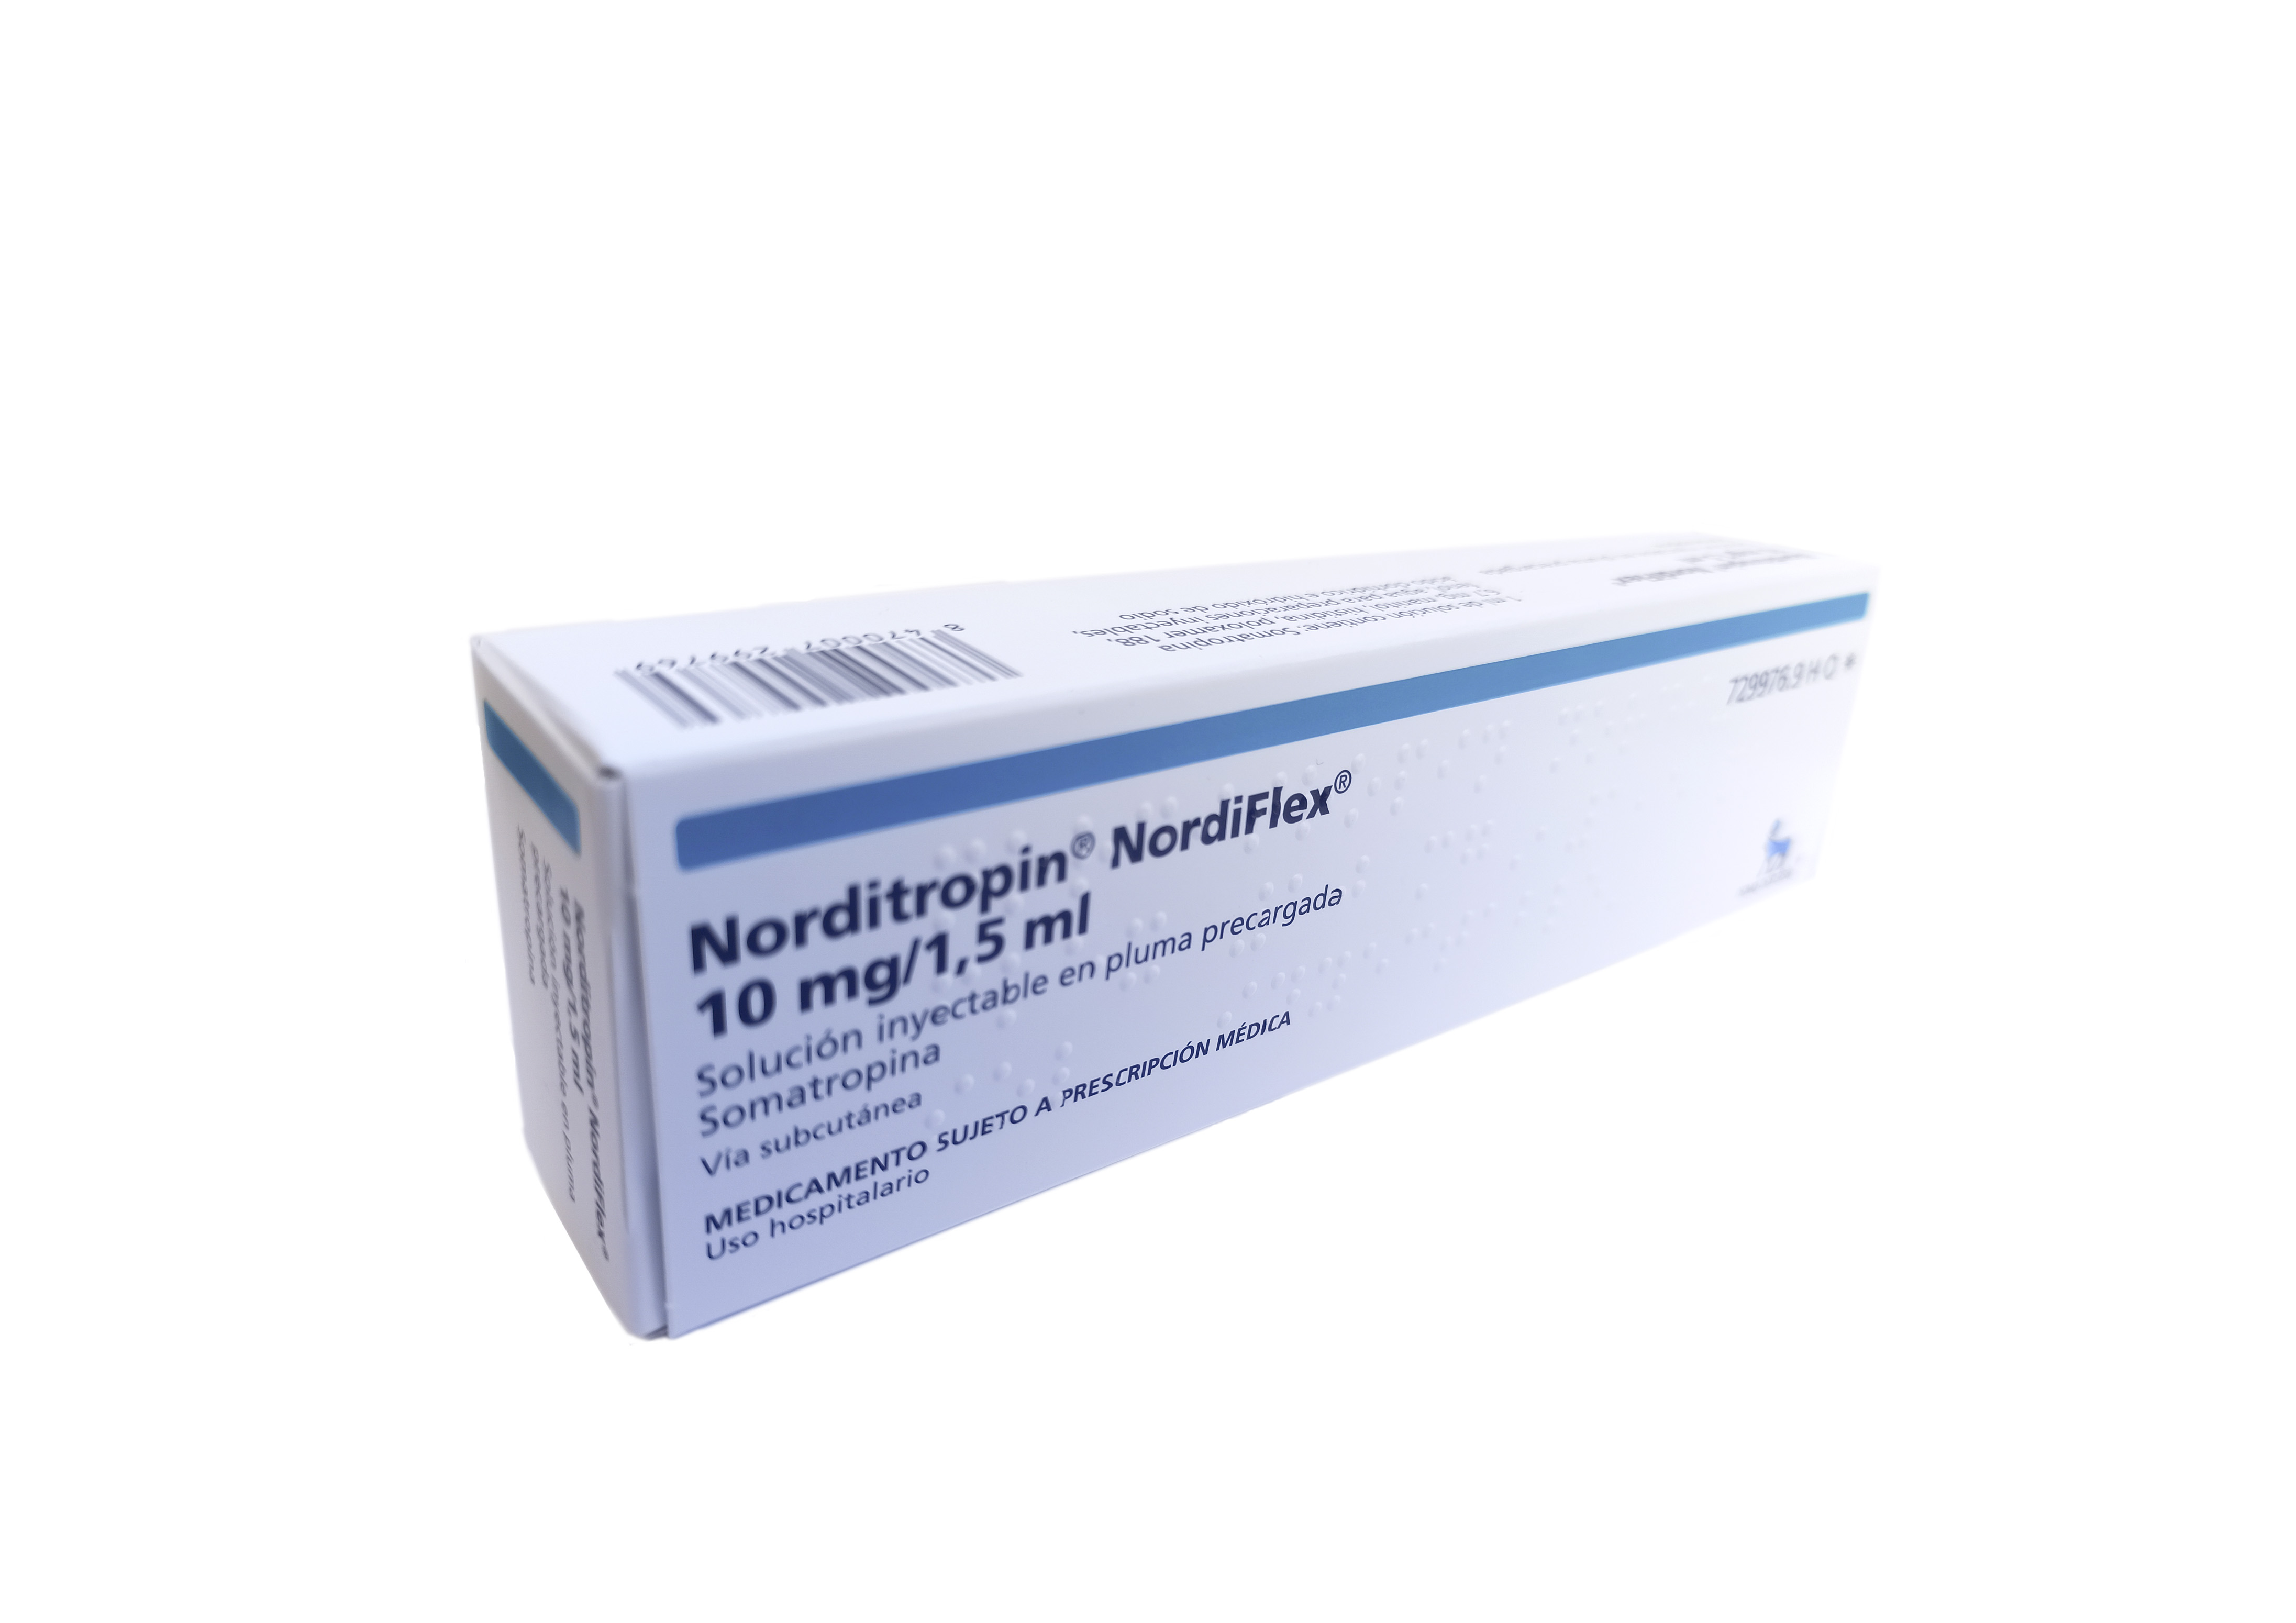 NORDITROPIN NORDIFLEX 10 mg 1 PLUMA PRECARGADA SOLUCION INYECTABLE 1,5 ml